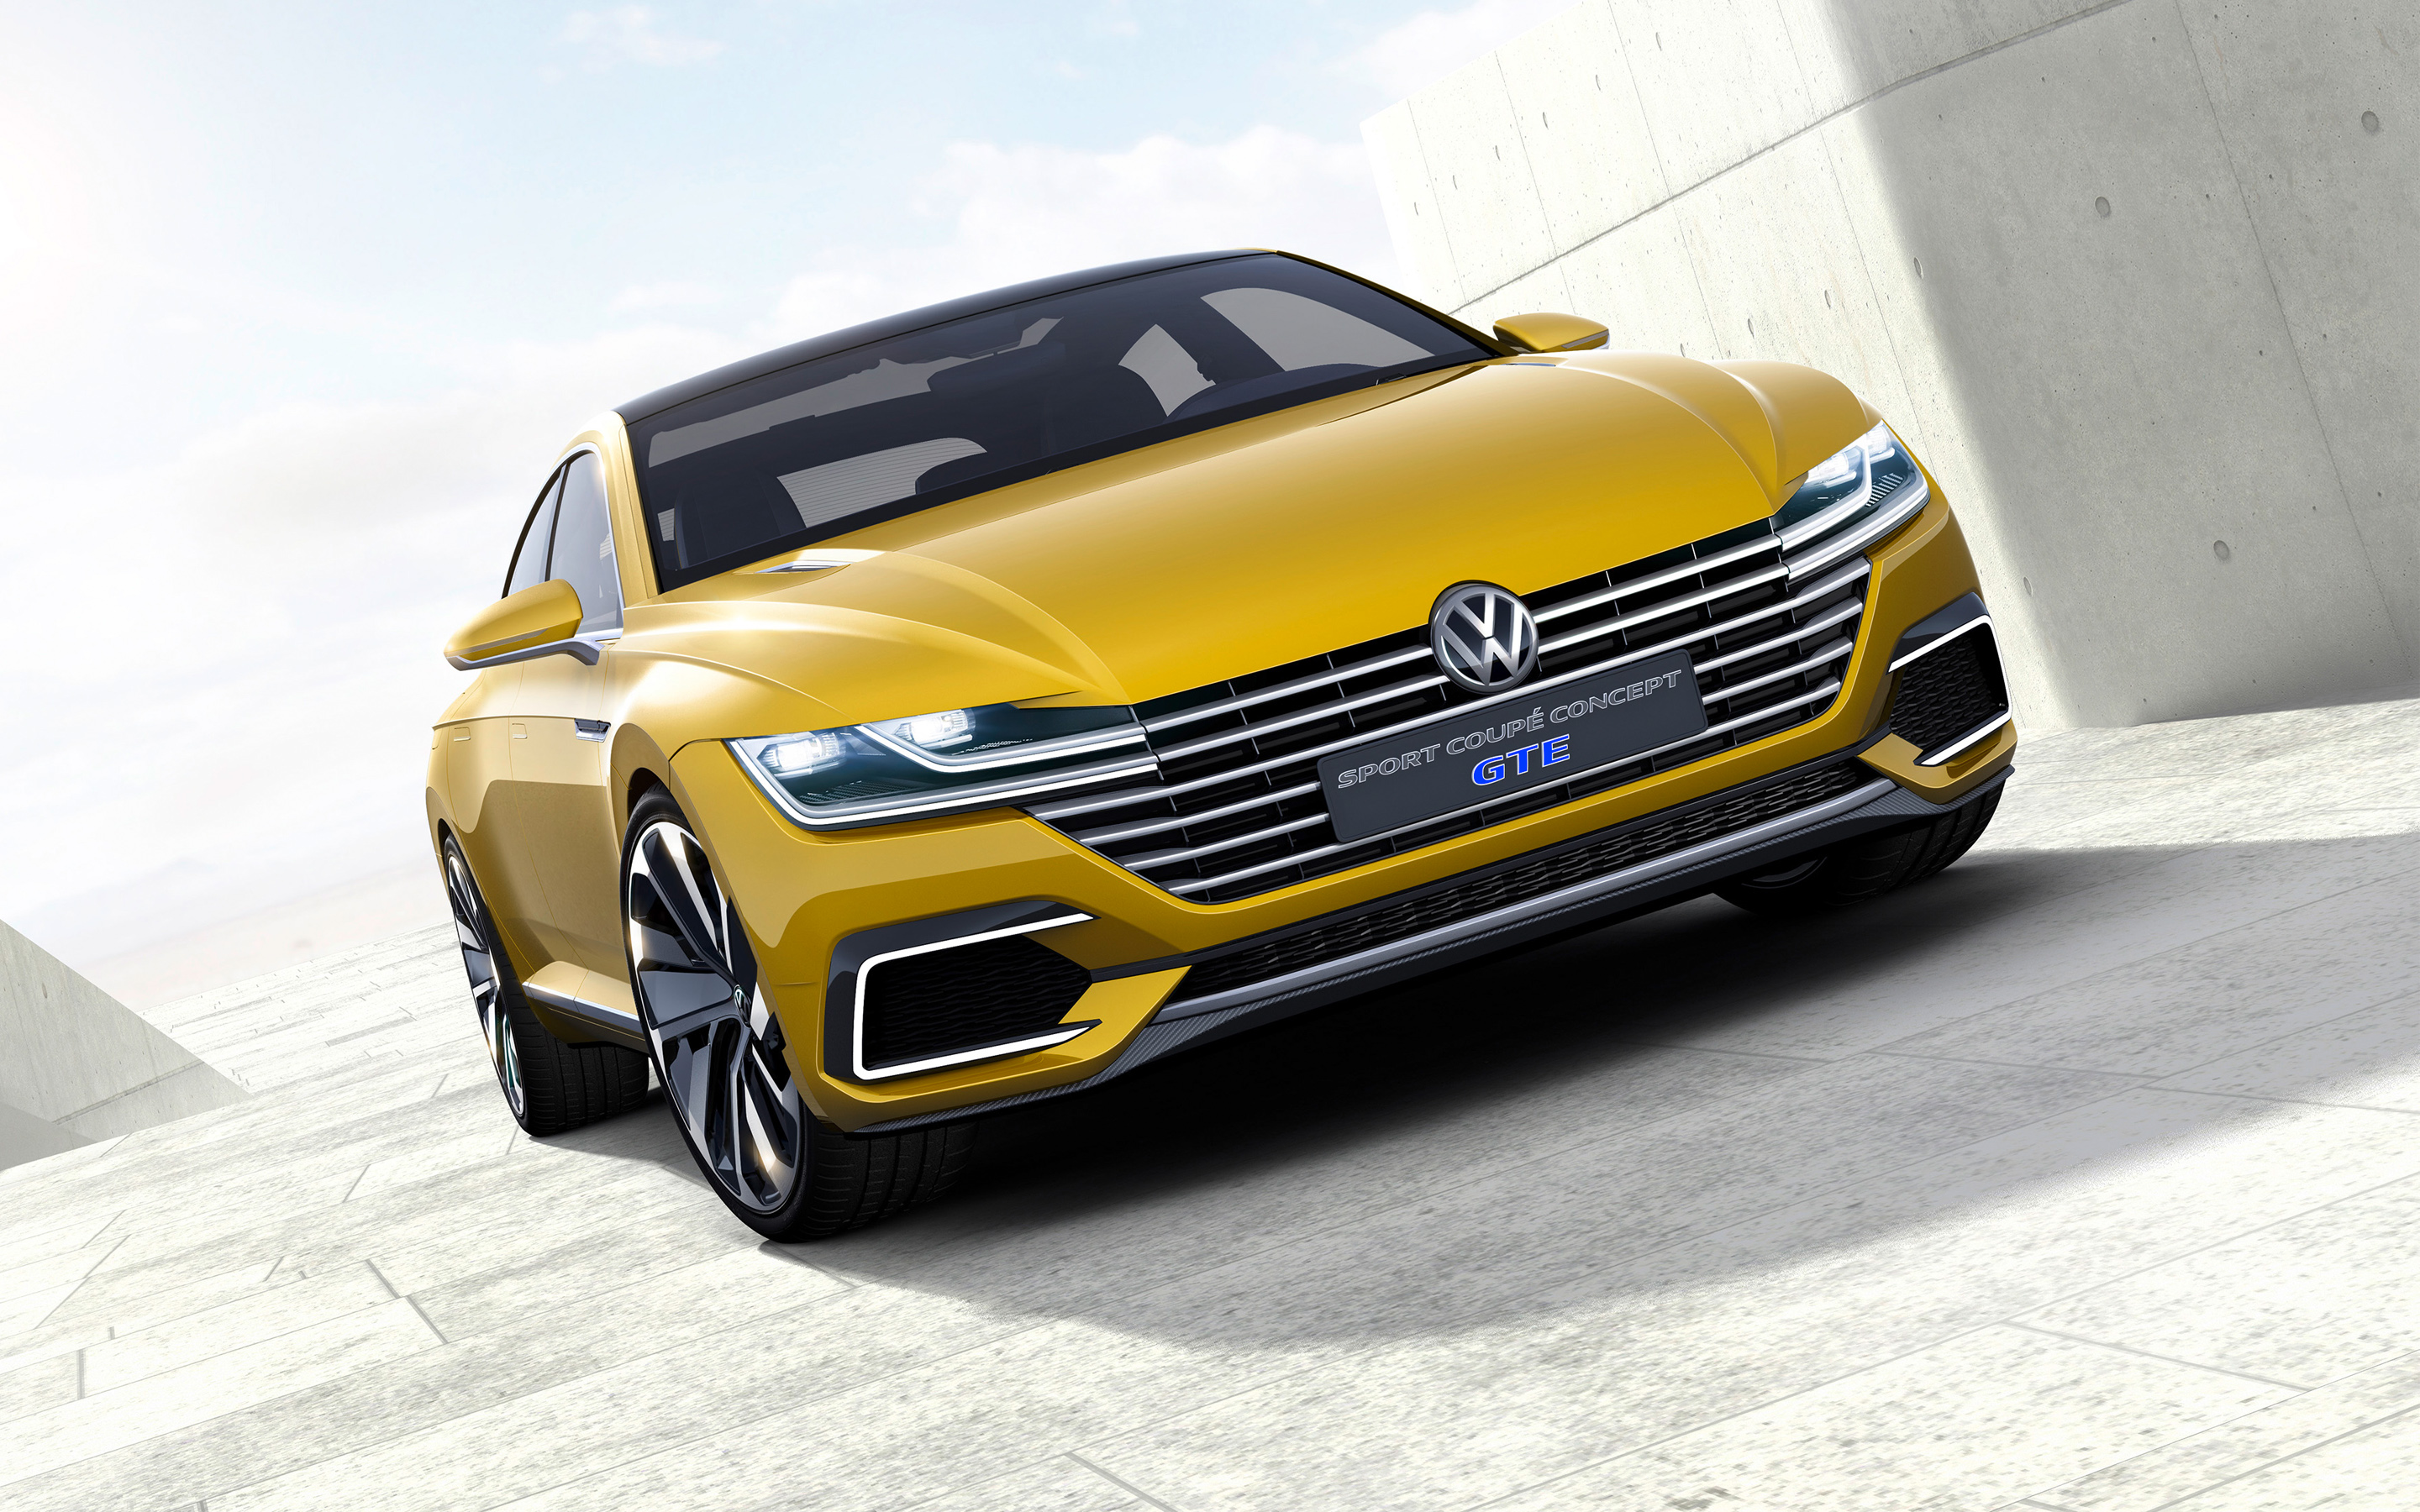 Volkswagen Sport Coupe Gte Concept Wallpaper HD Car